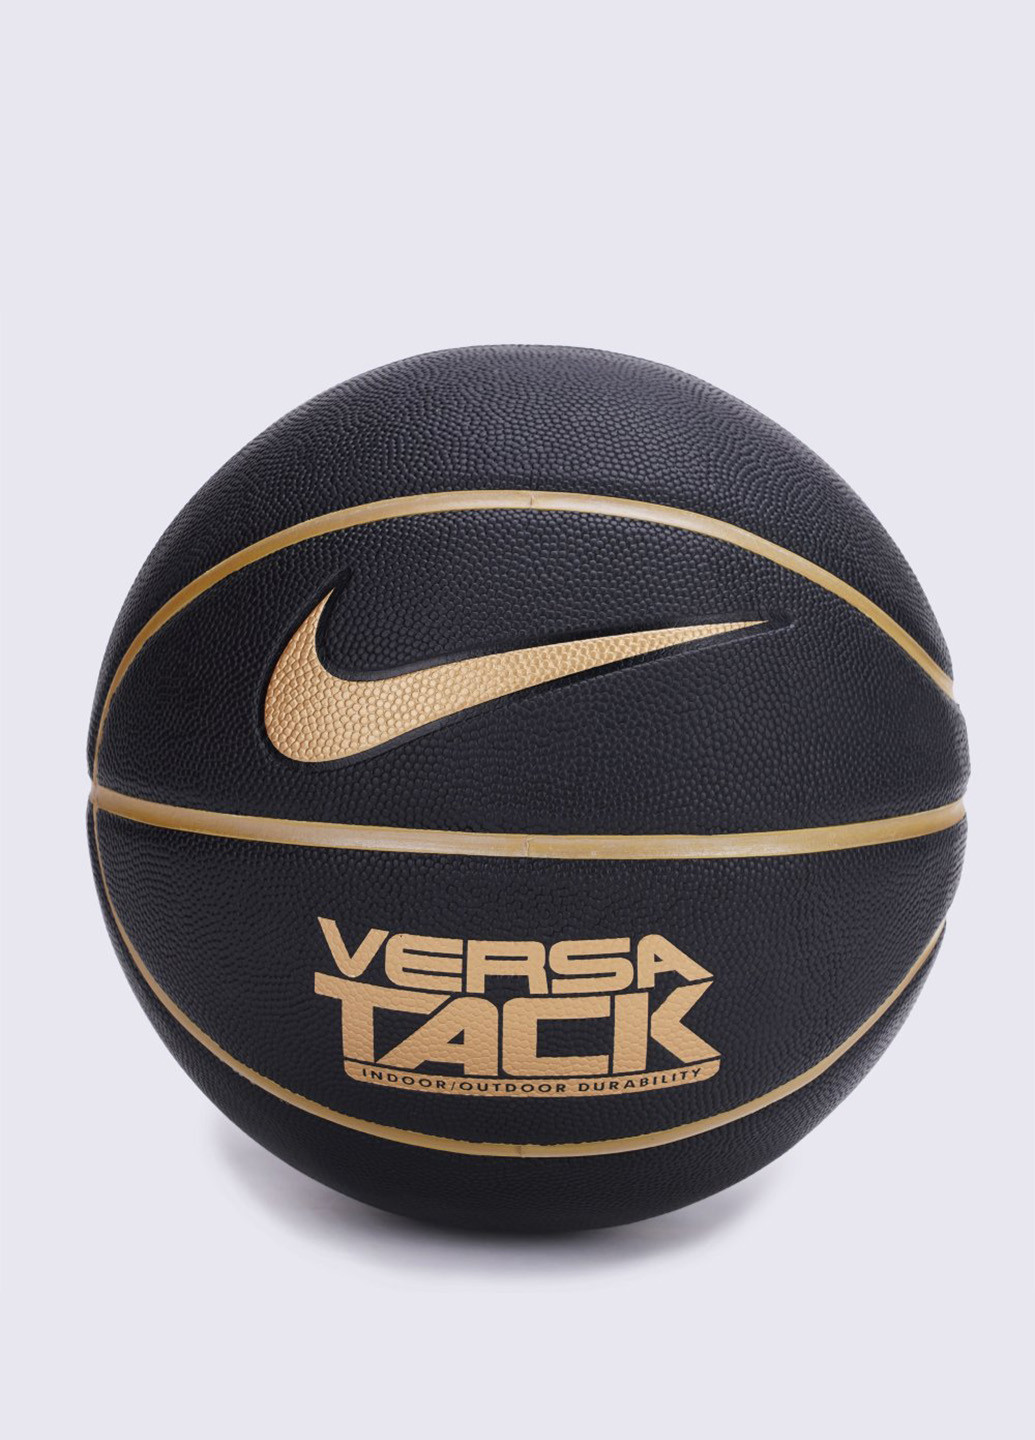 Мяч №7 Nike versa tack 8p (184157045)